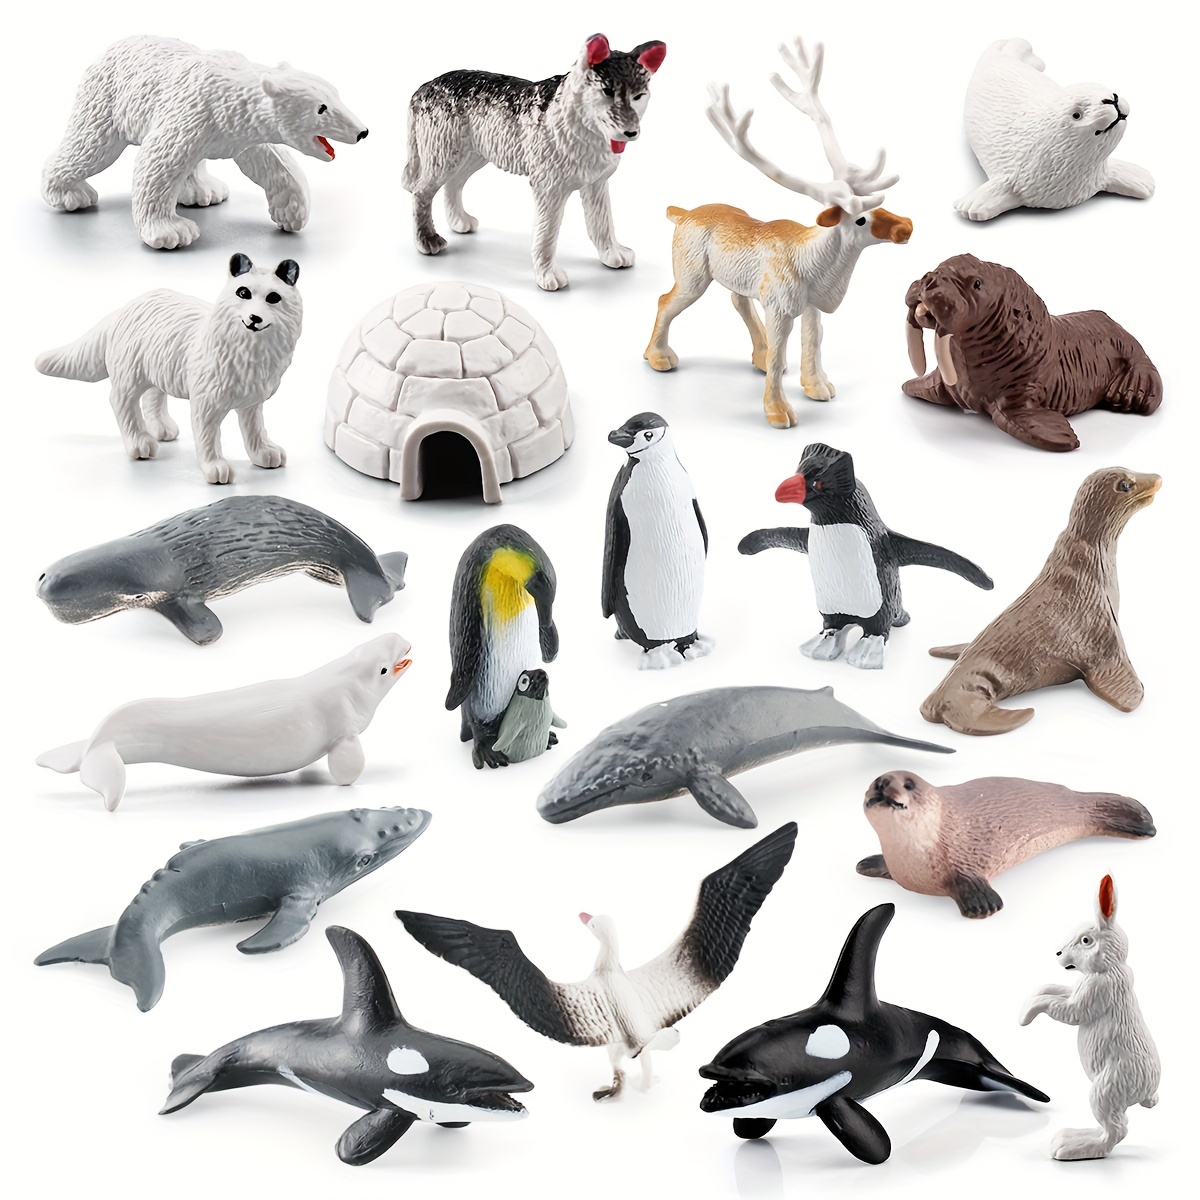 

Simulation Of Wild Arctic And Antarctic Animal Models, Arctic Rabbits, Arctic Foxes, Seals, Beluga Whales, Penguins, Desktop Ornaments, Toys, Easter Gift